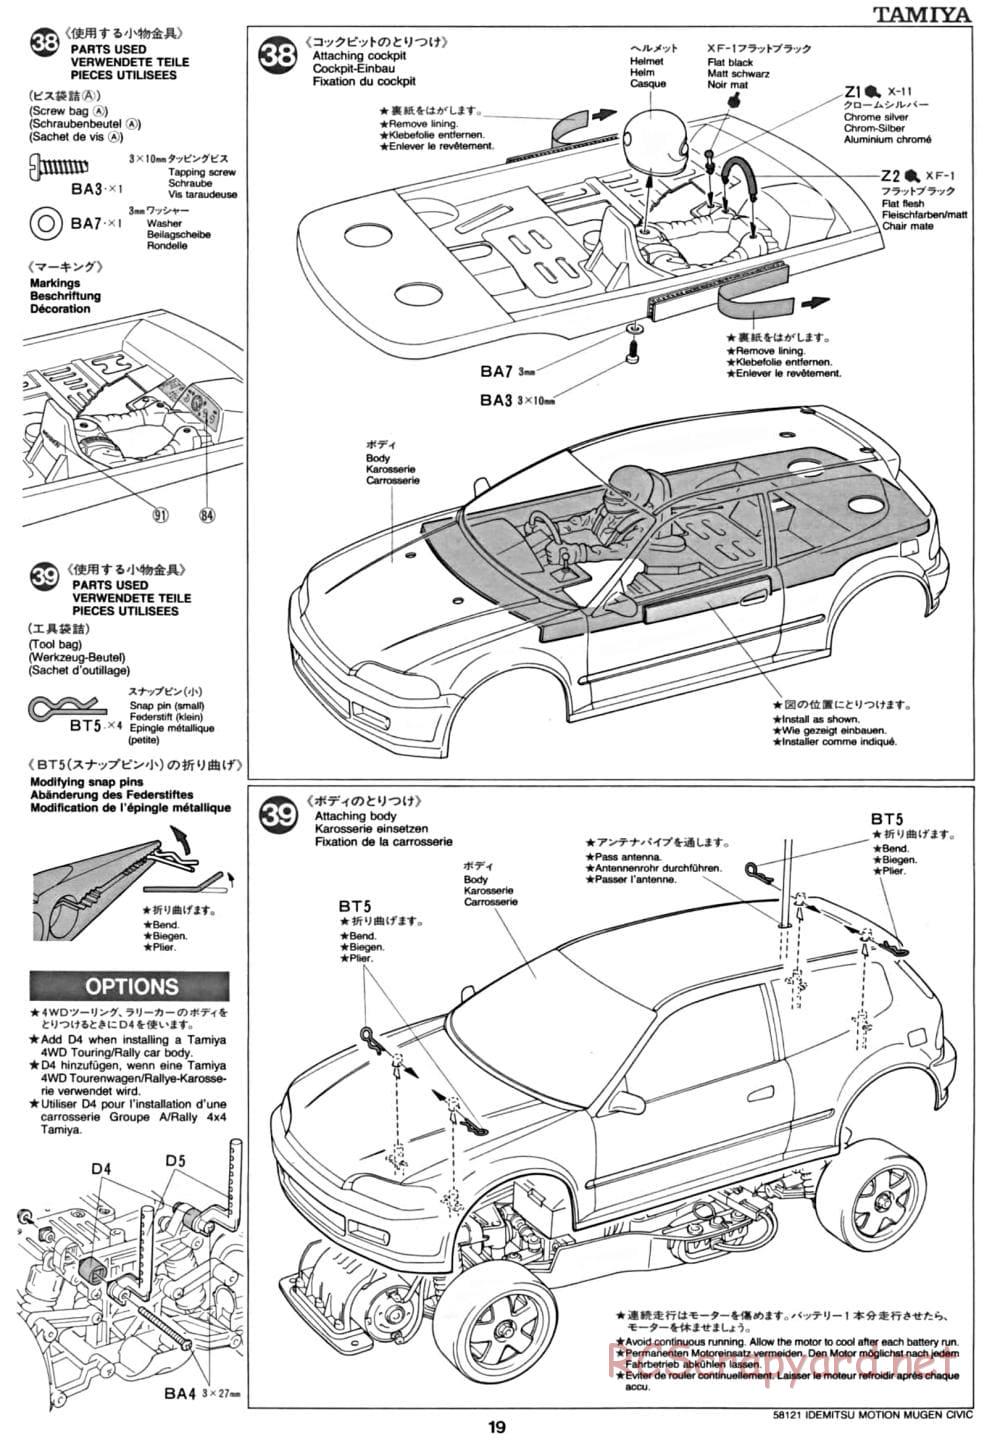 Tamiya - Idemitsu Motion Mugen Civic - FF-01 Chassis - Manual - Page 19